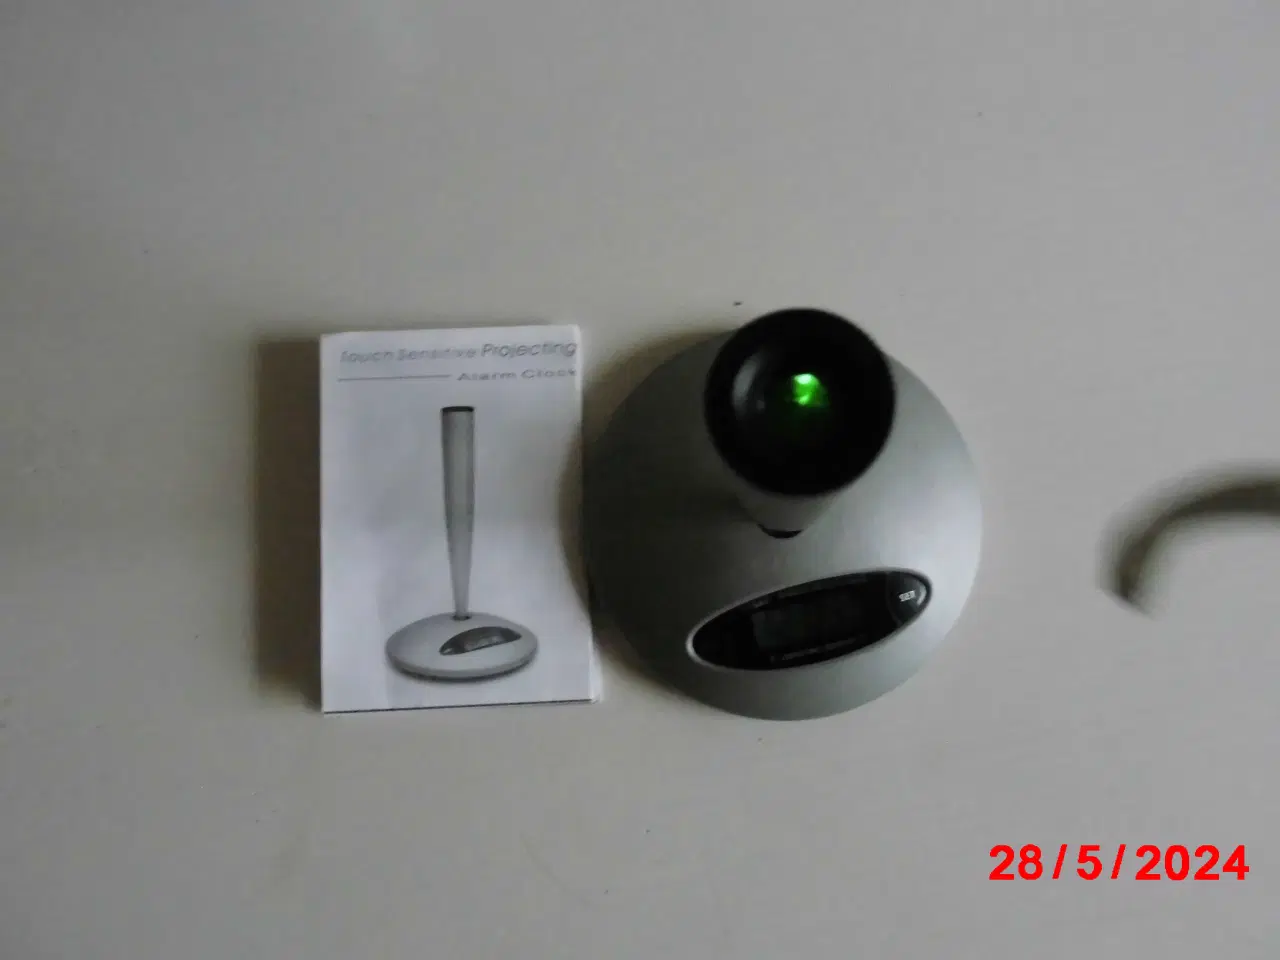 Billede 3 - Touch Sensitive Projecting (Alarm Clook)